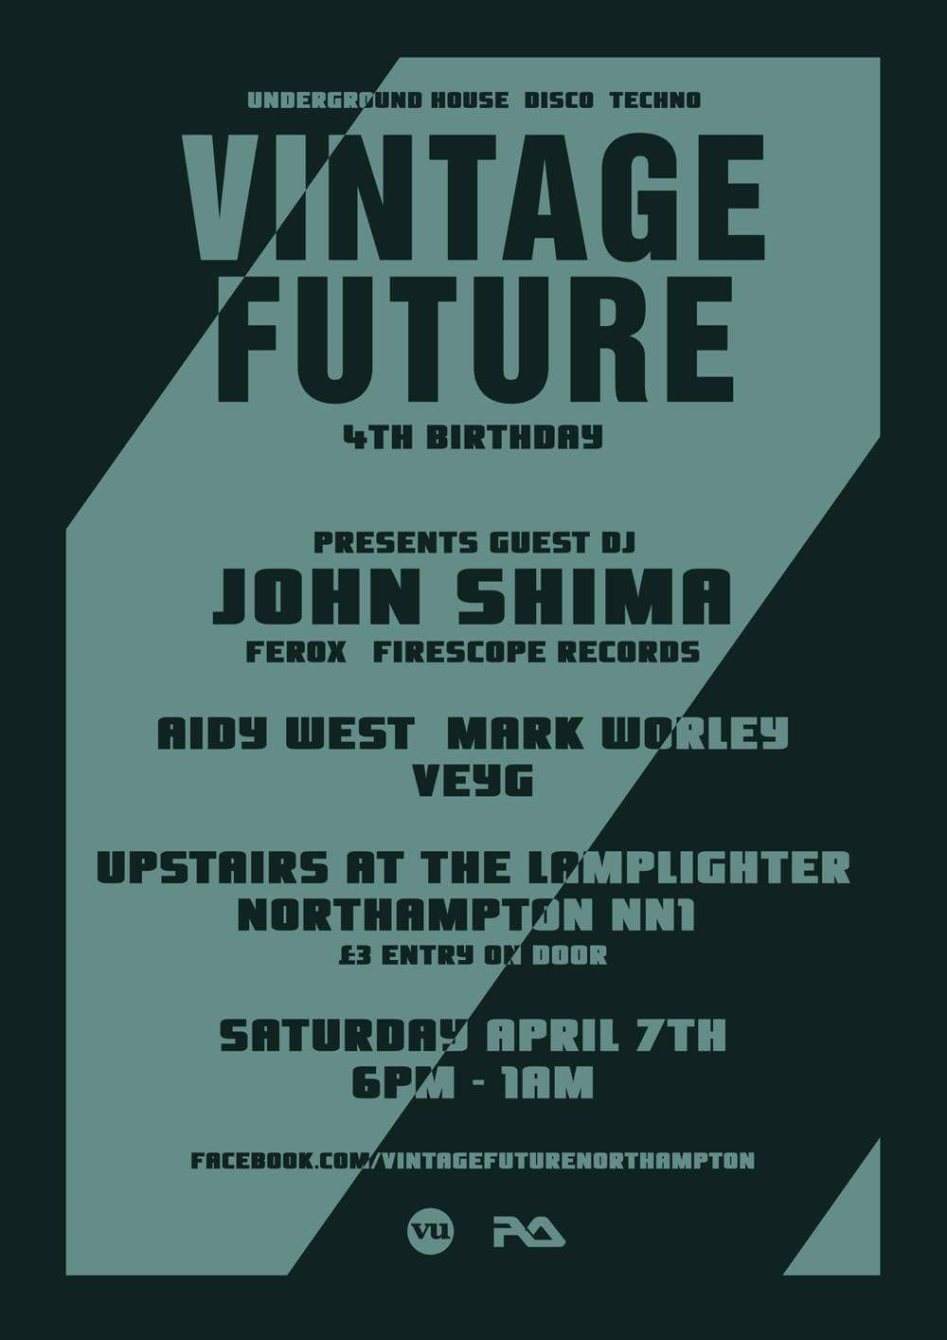 Vintage Future 4th Birthday with John Shima - フライヤー表